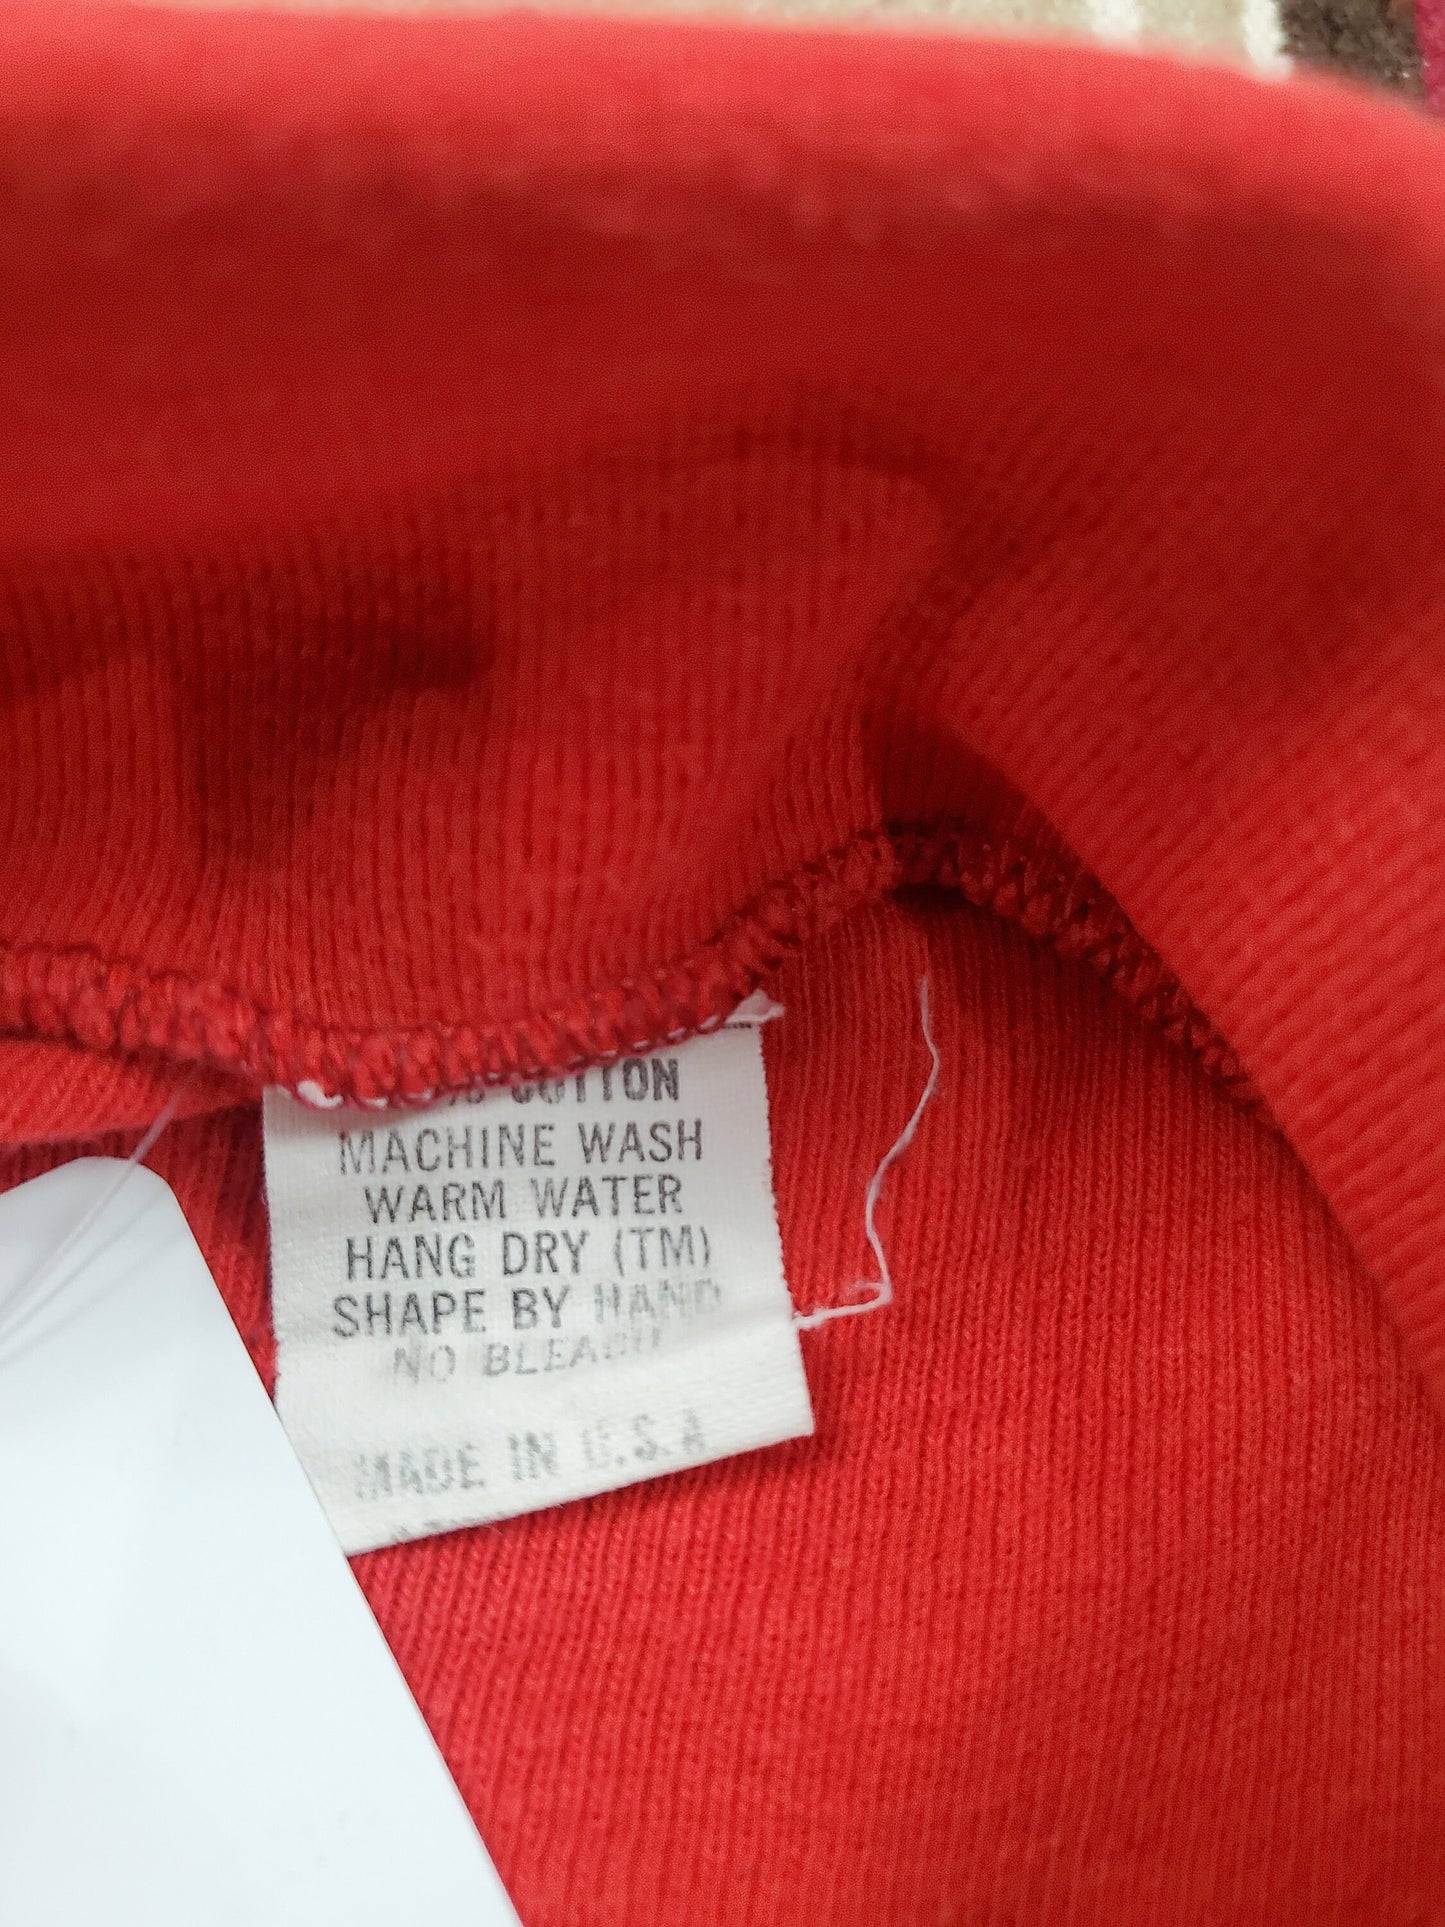 1980s/1990s Red Cotton Turtleneck Shirt Women's Size S/M